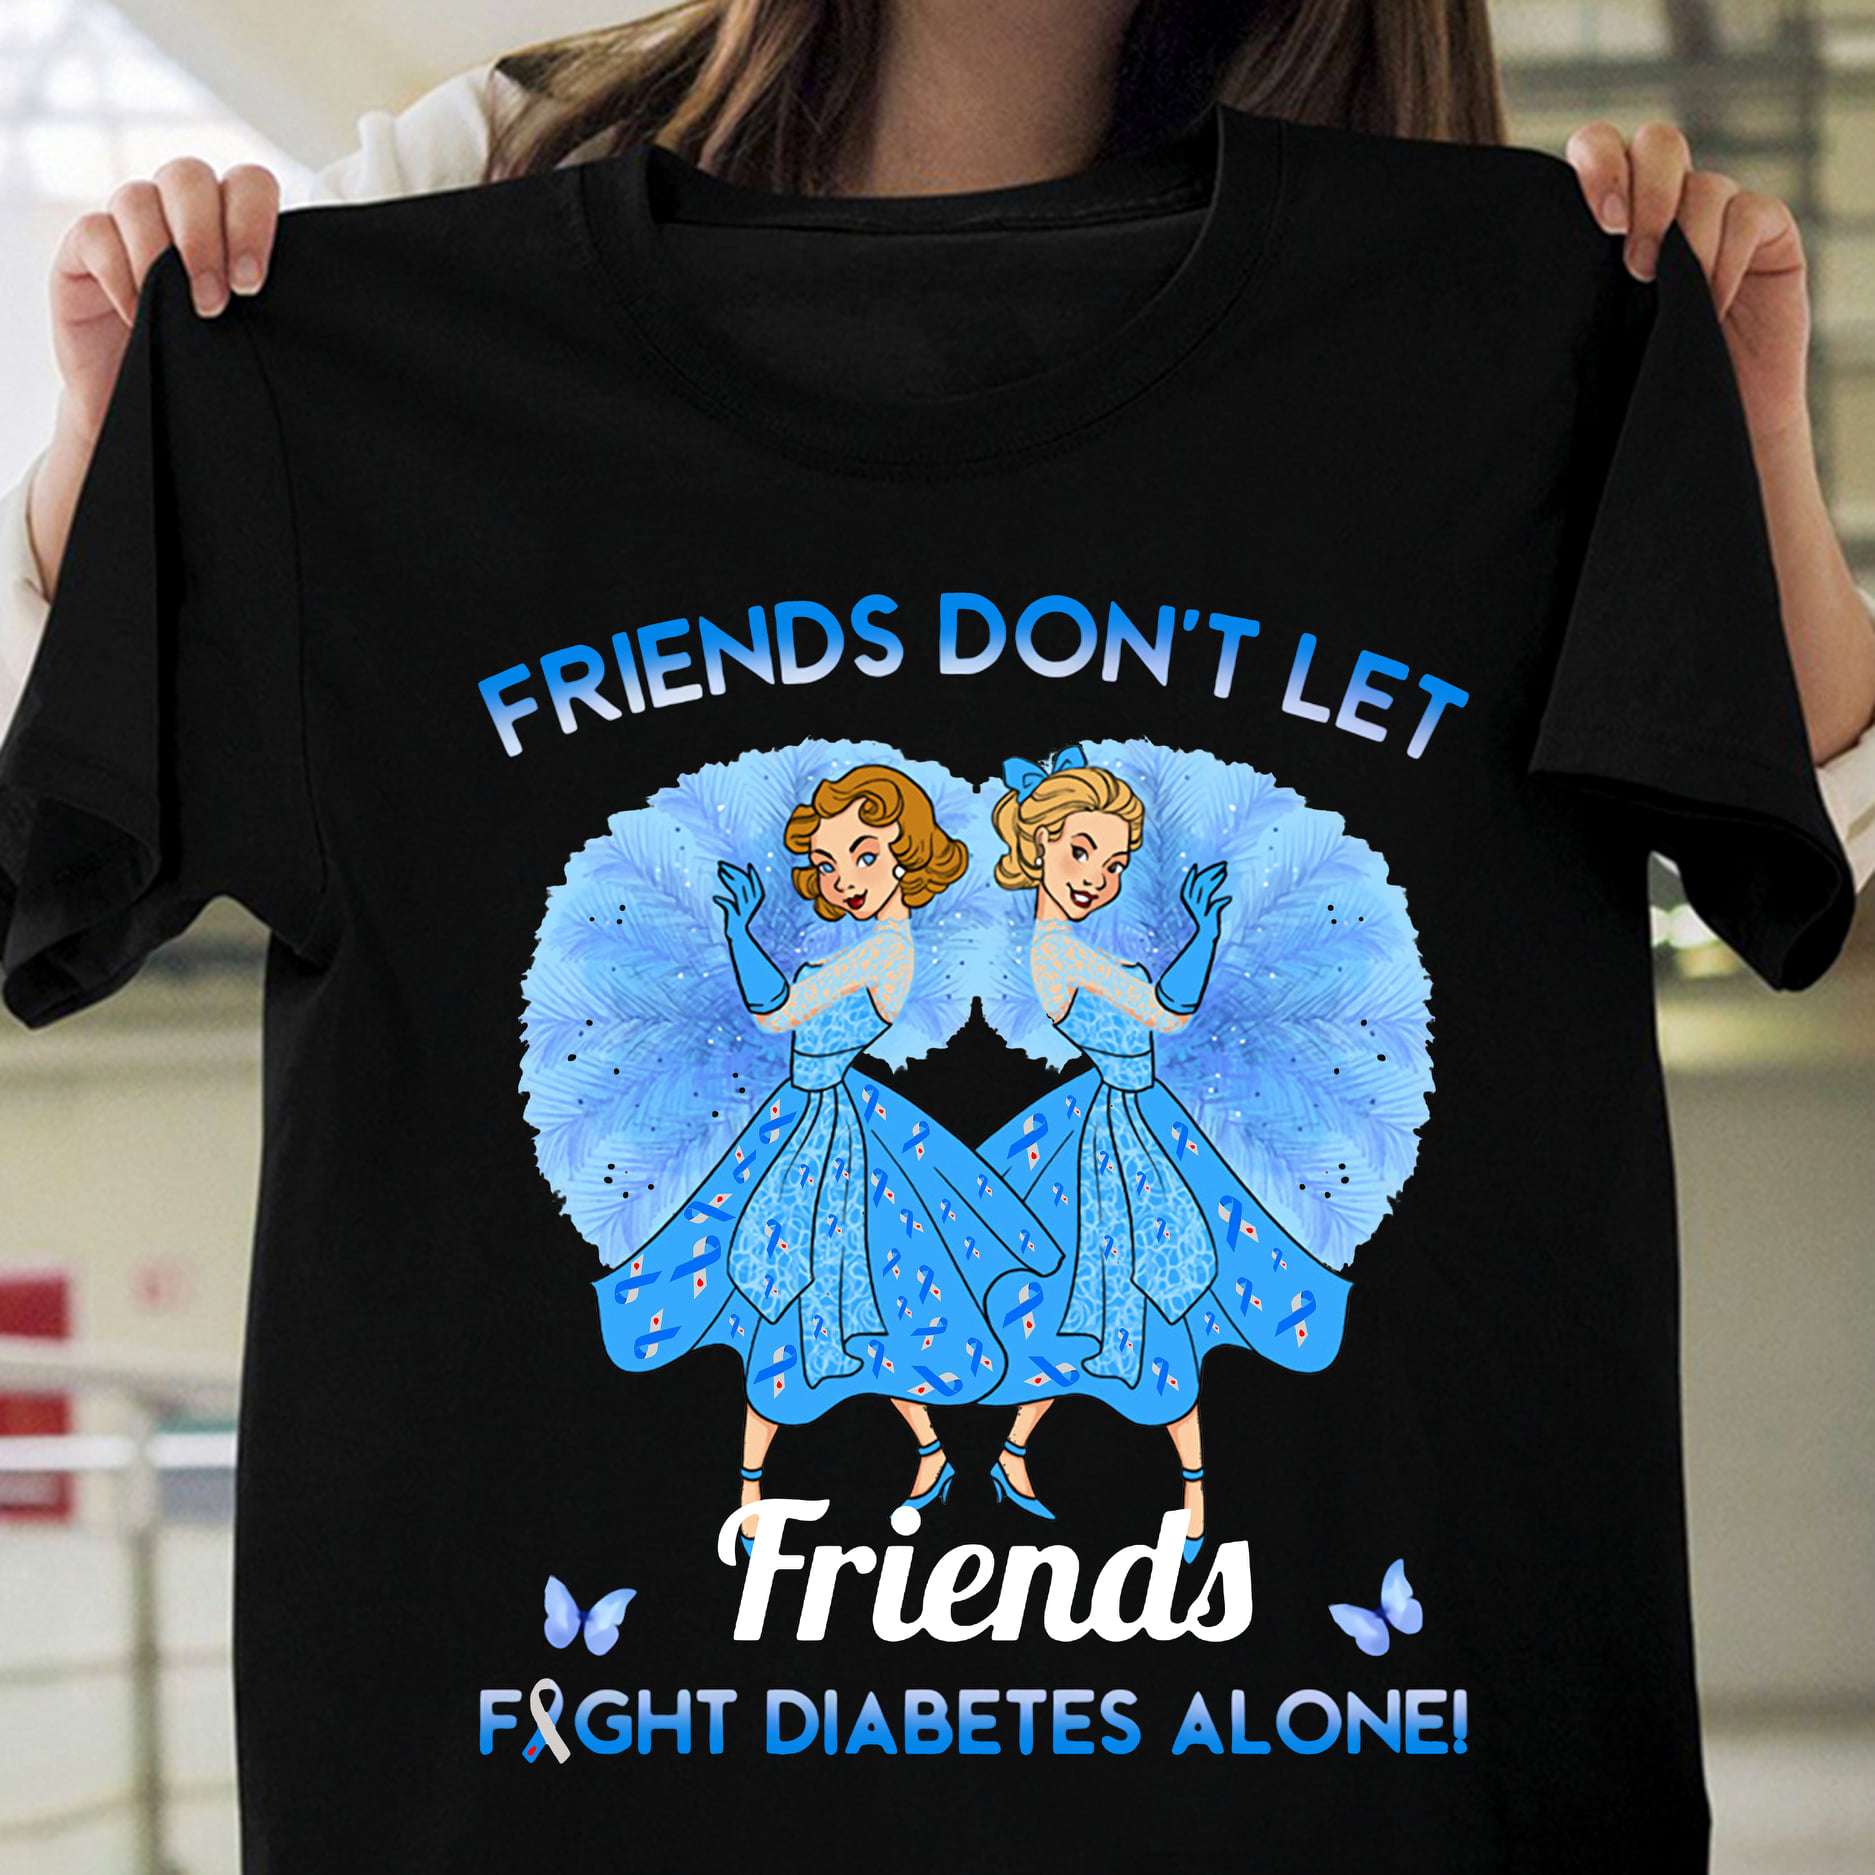 Friends don't let friends fight diabetes alone - Diabetes Awareness, Diabetes Girls